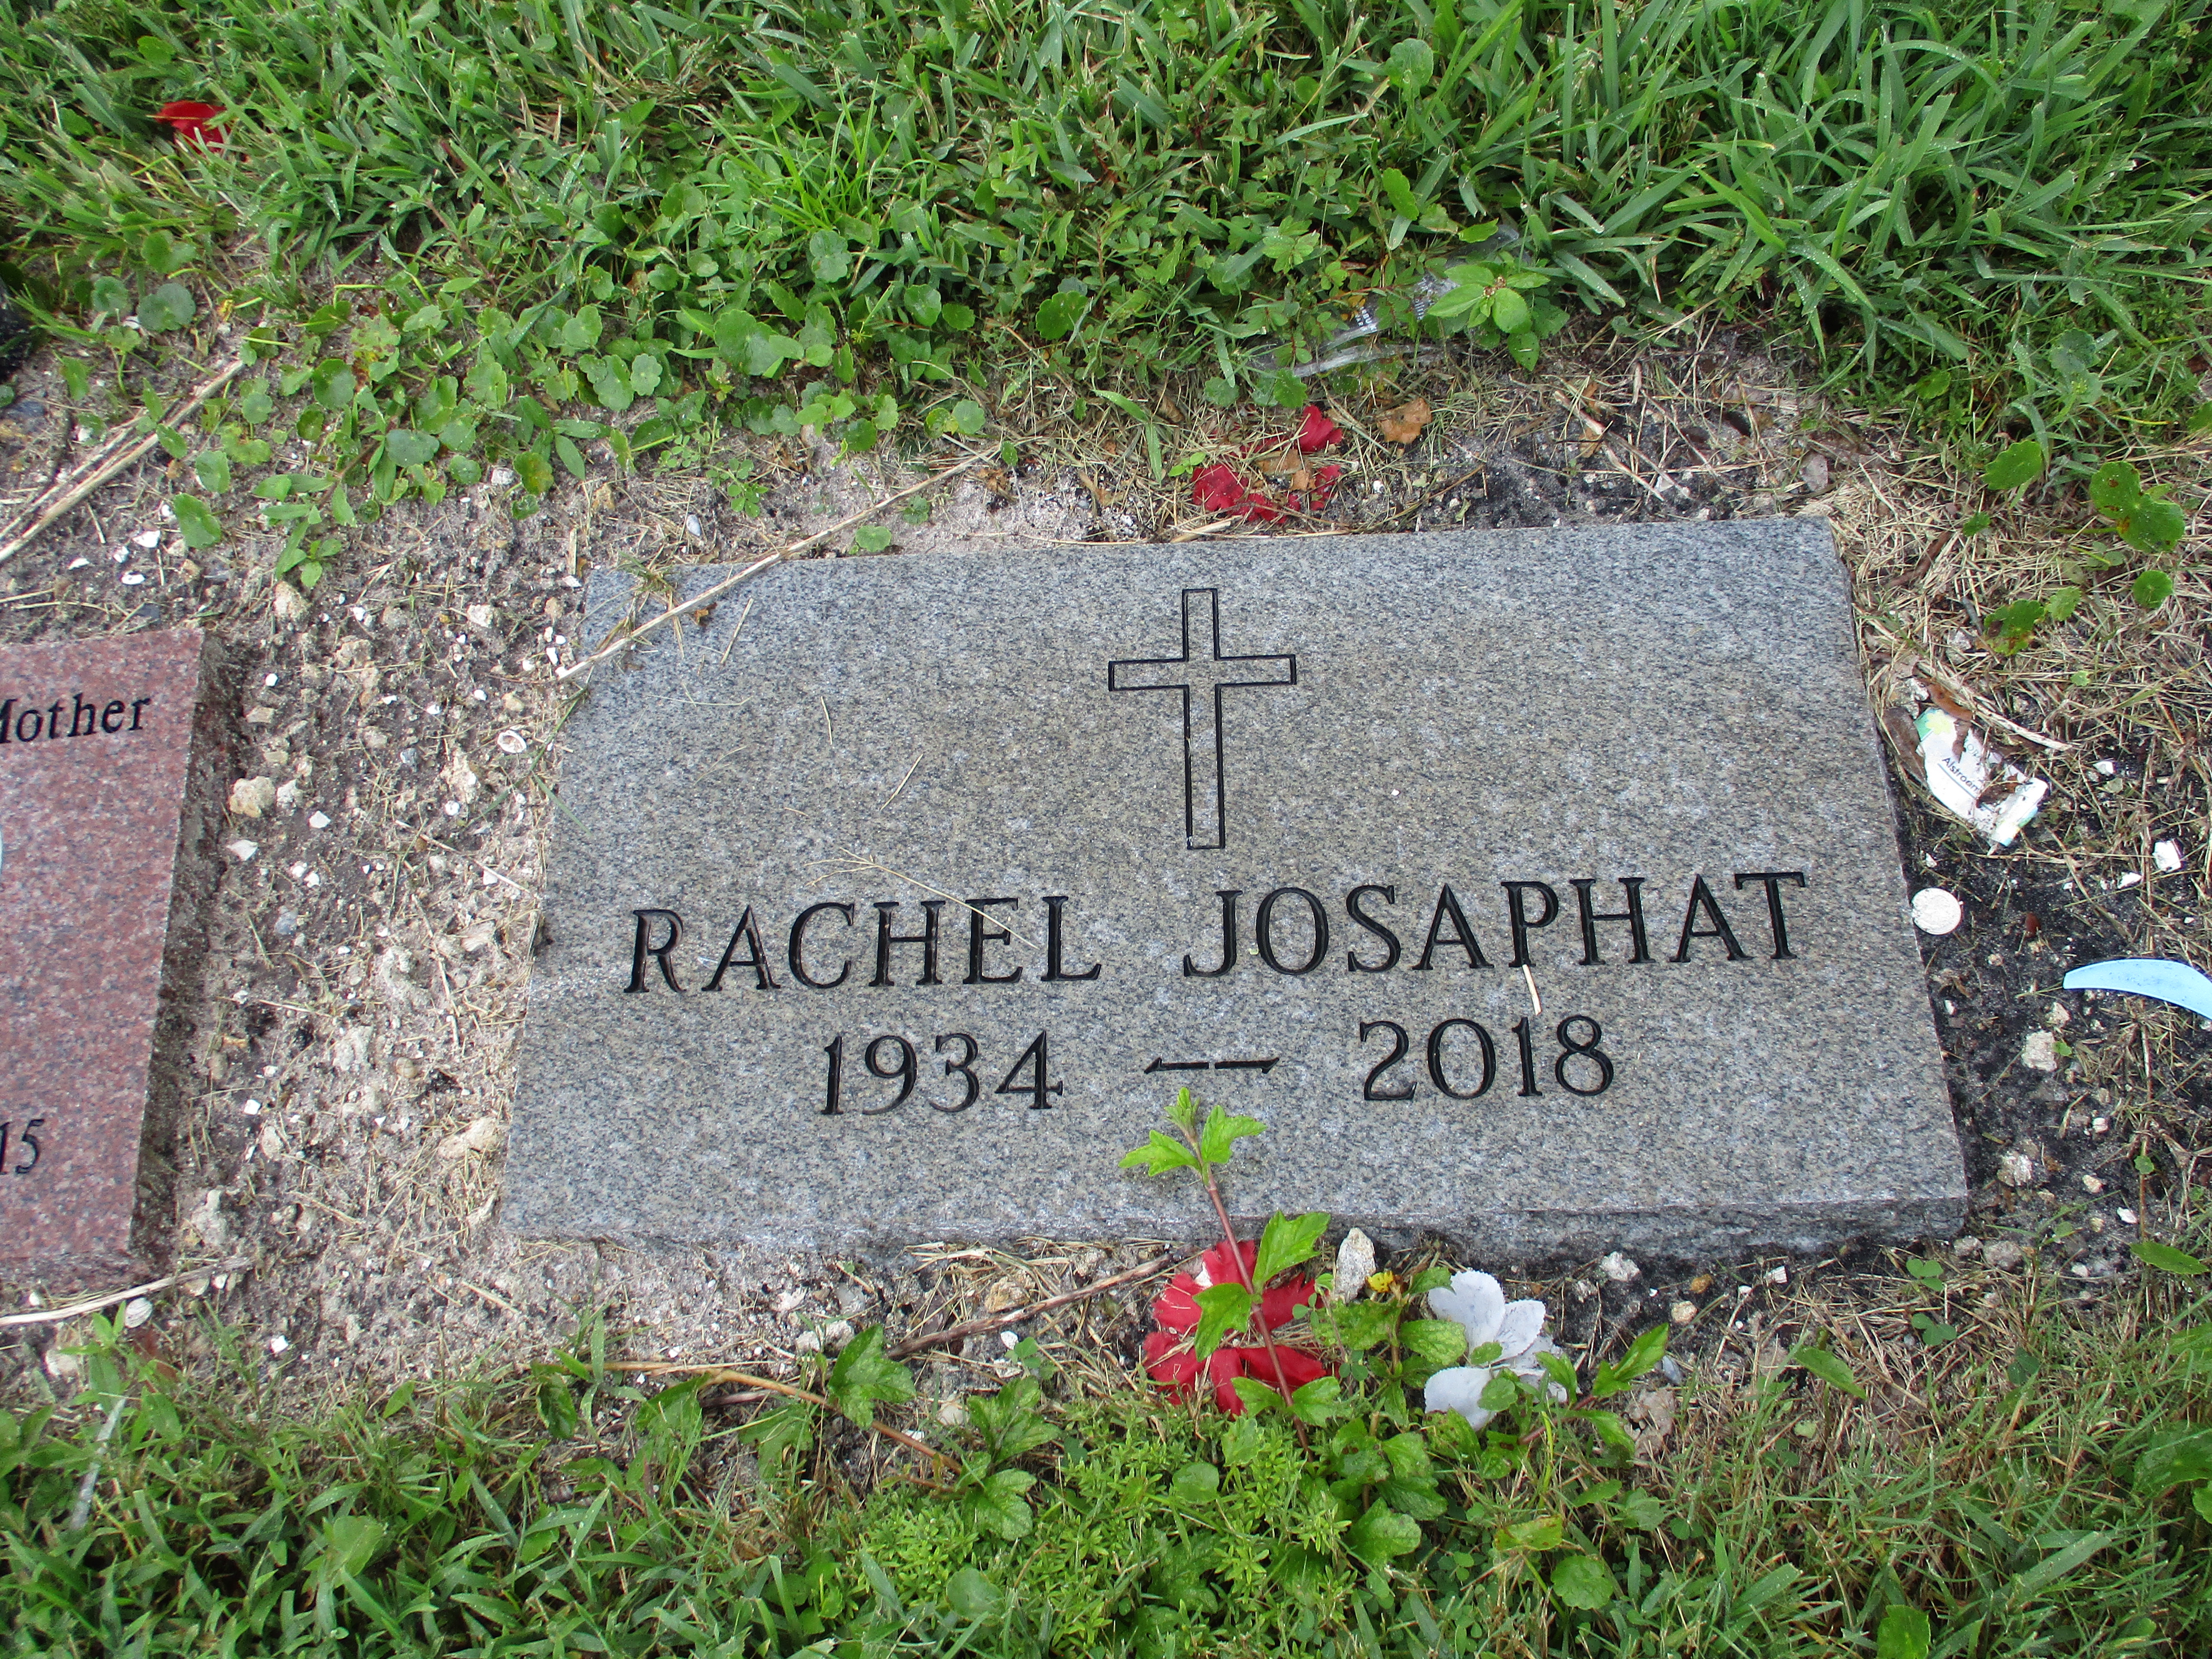 Rachel Josaphat